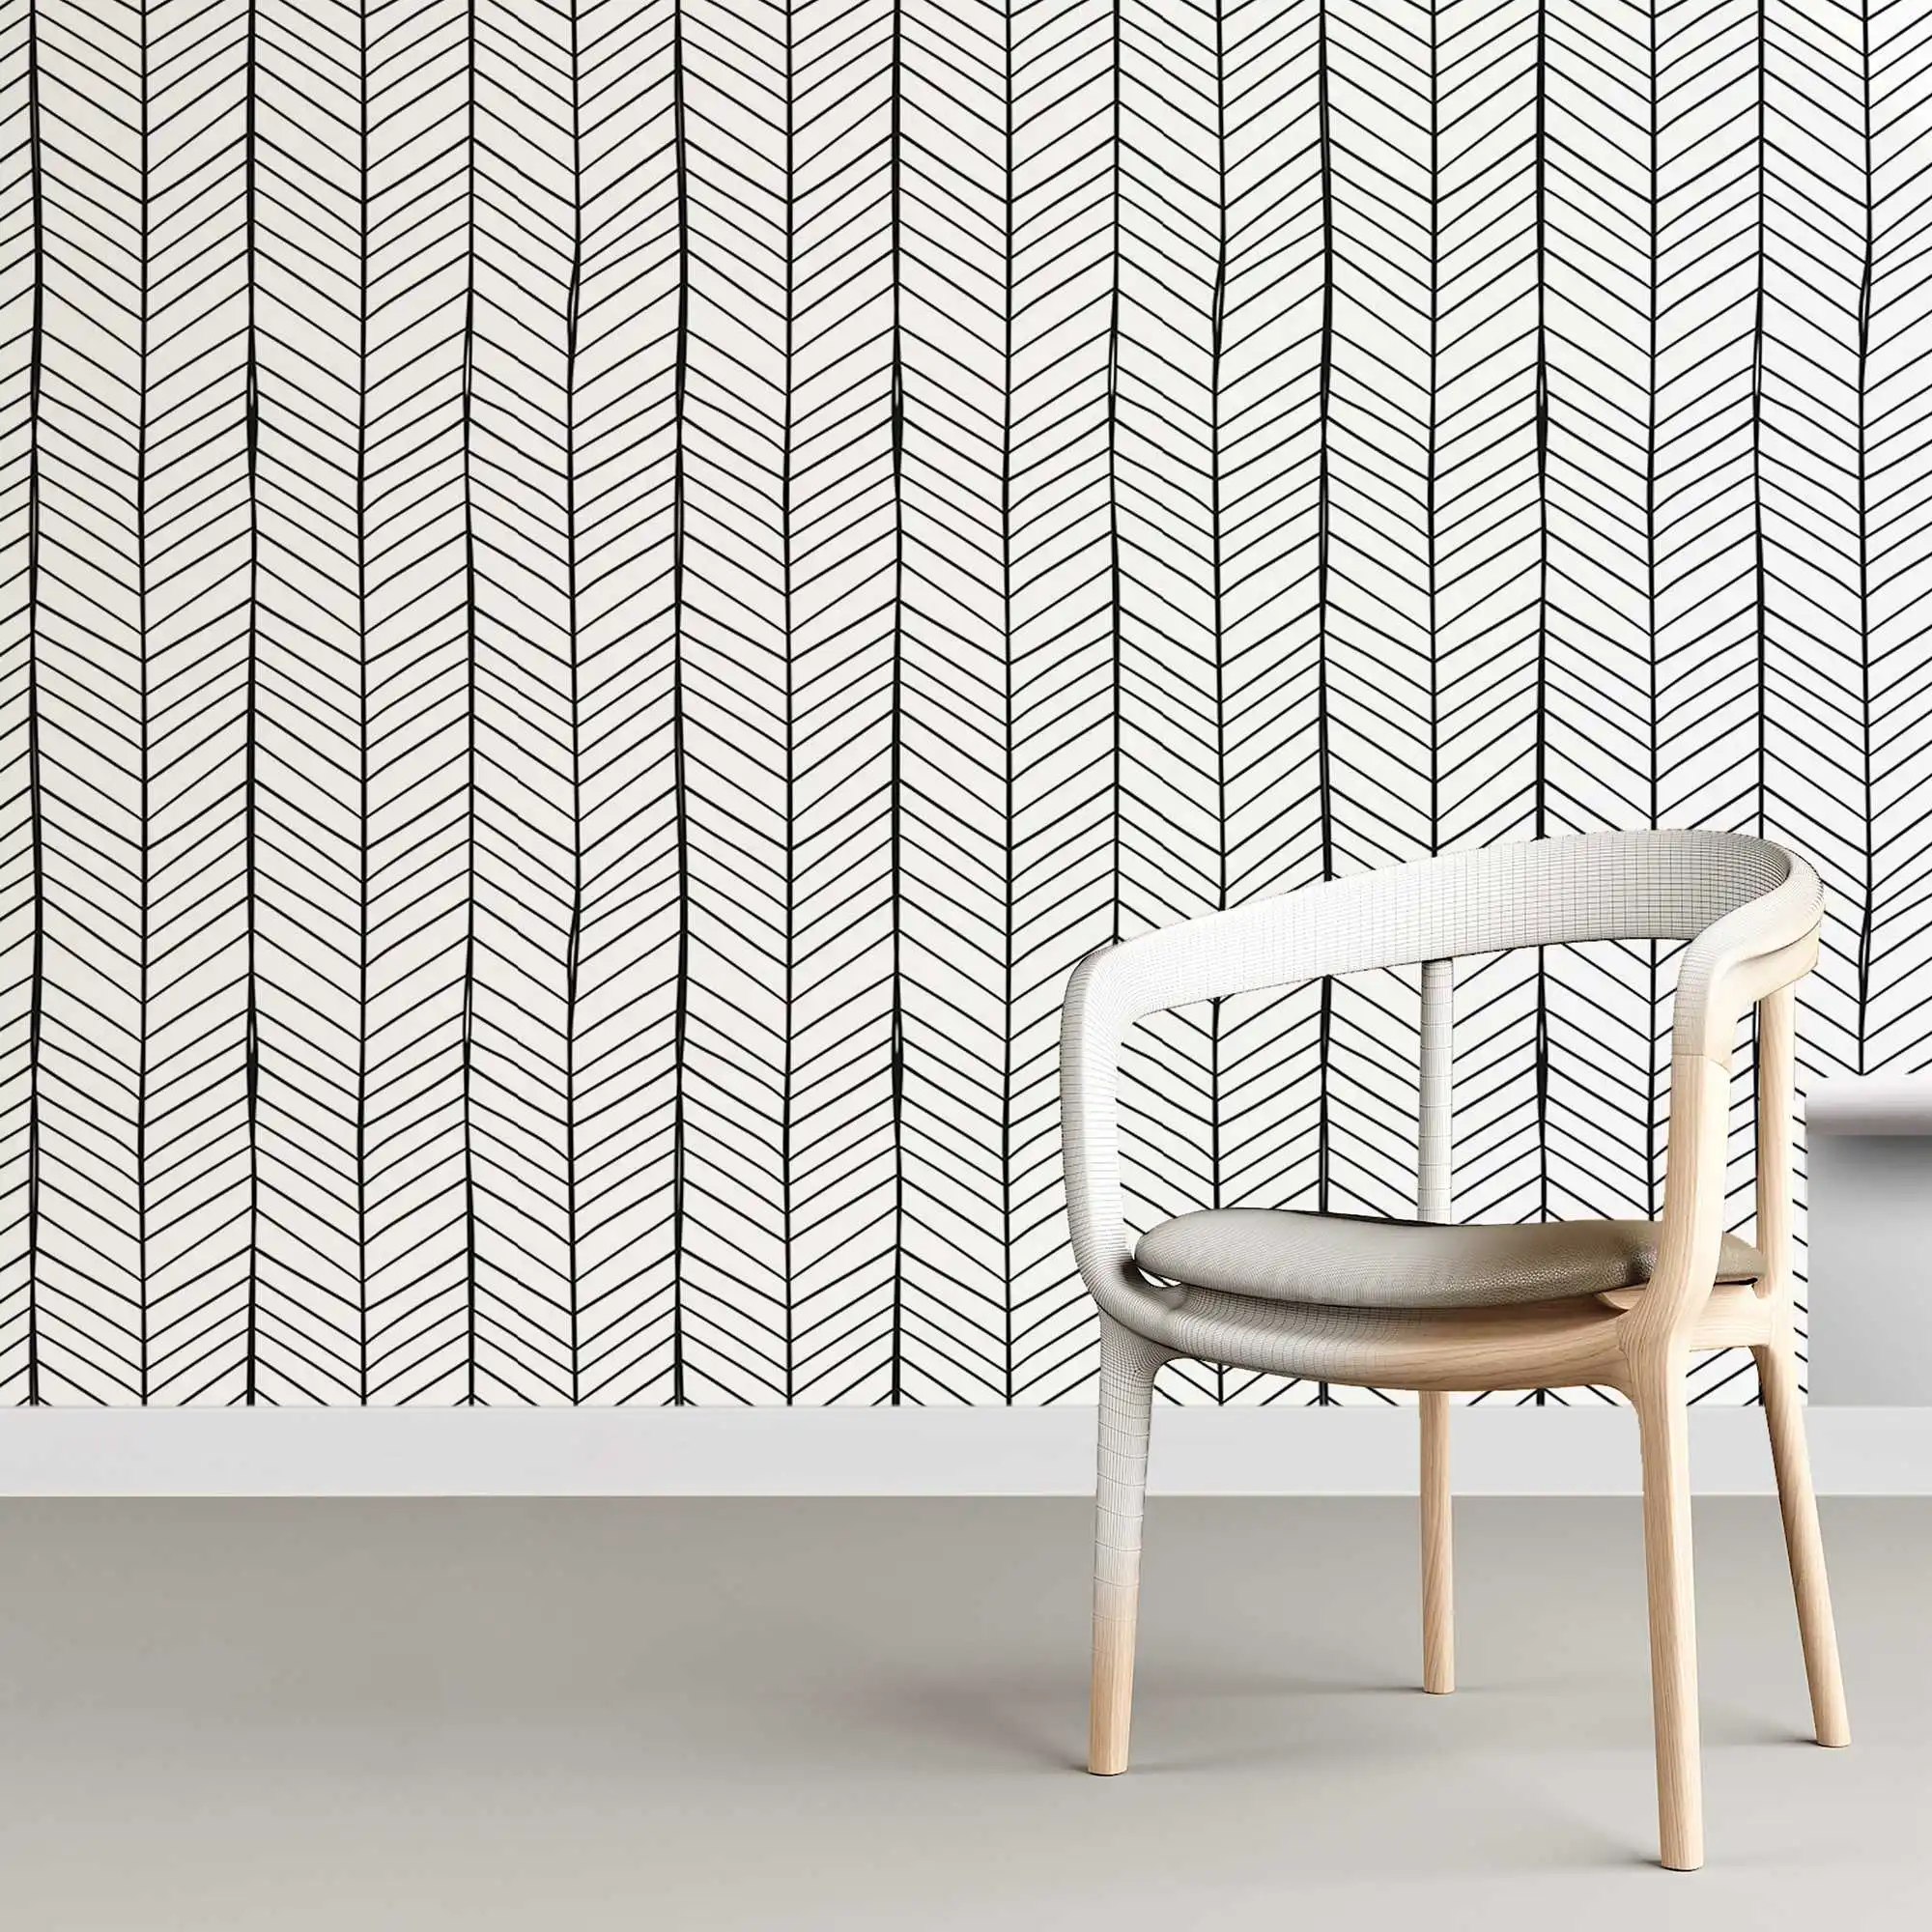 Beibehand-papel de parede clássico estilo nórdico, preto e branco